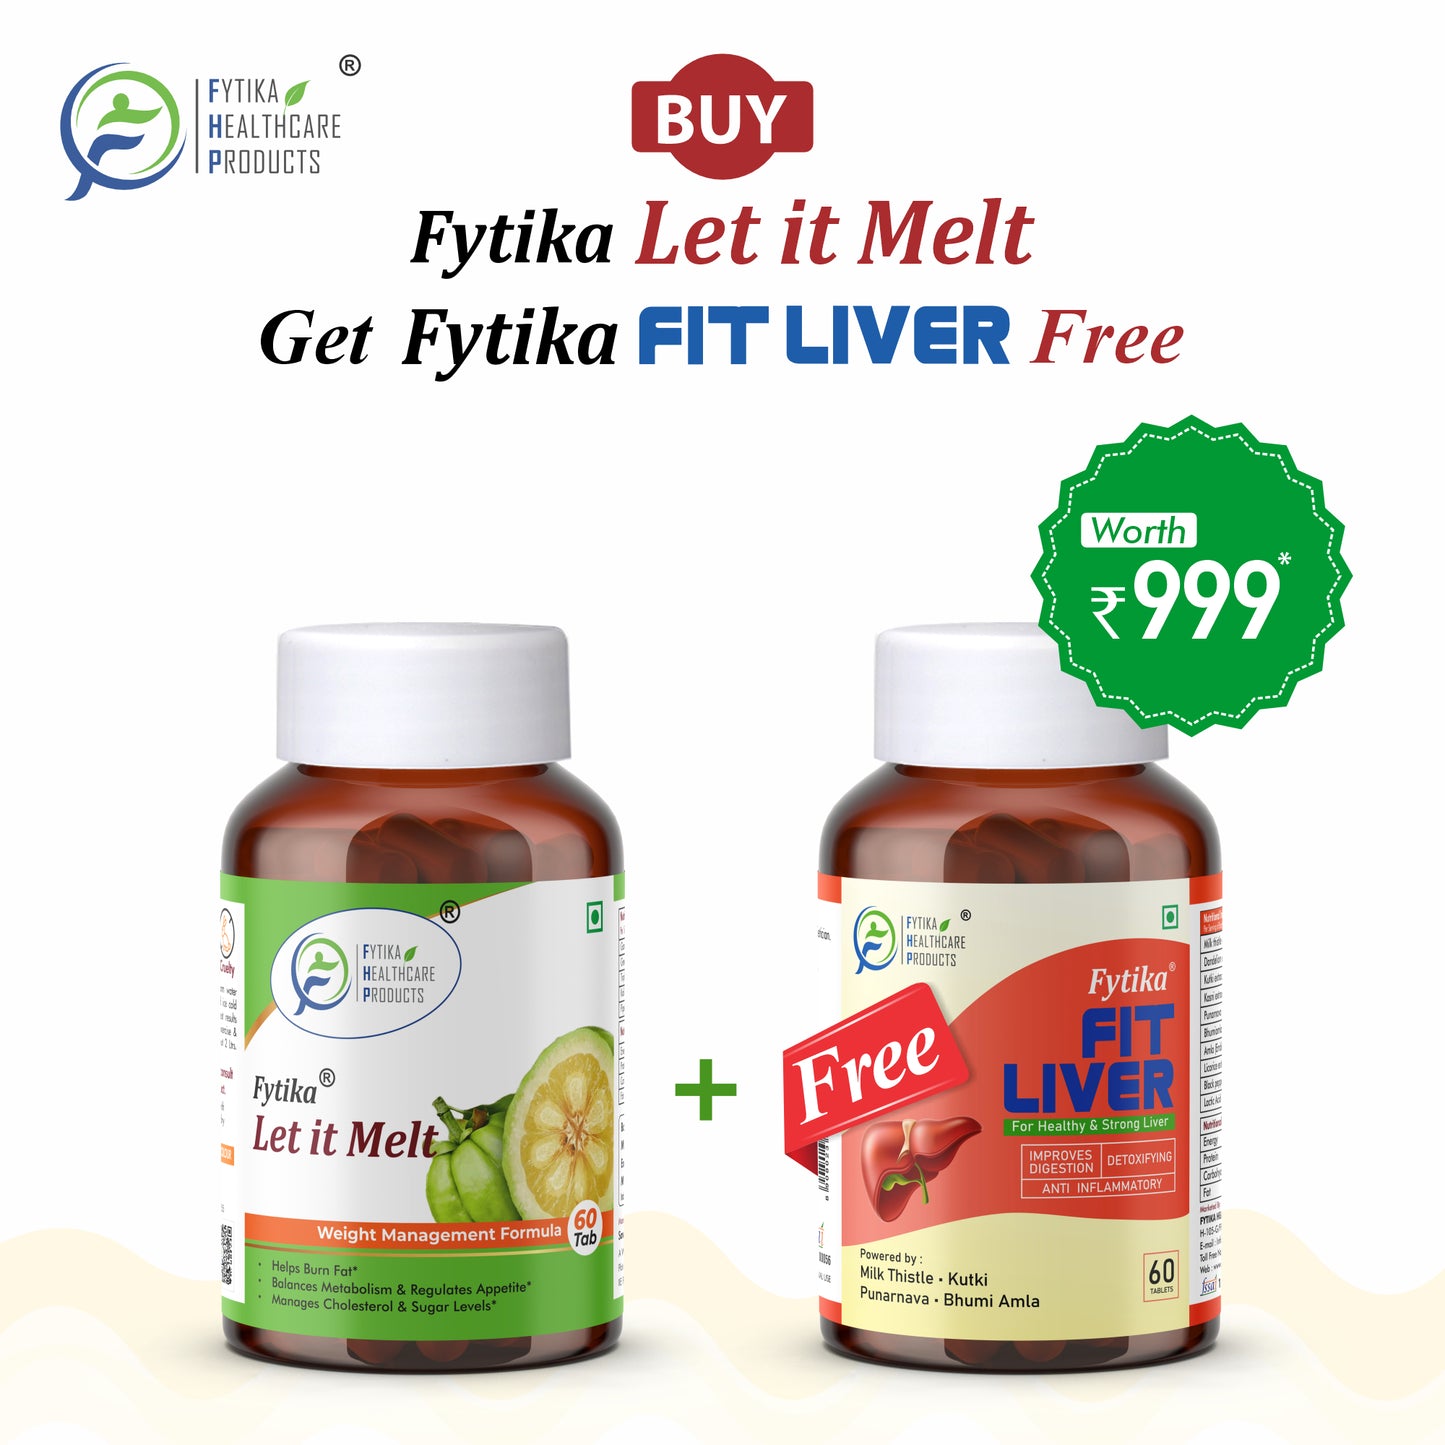 Get FREE Fytika Fit Liver with Fytika Let It Melt